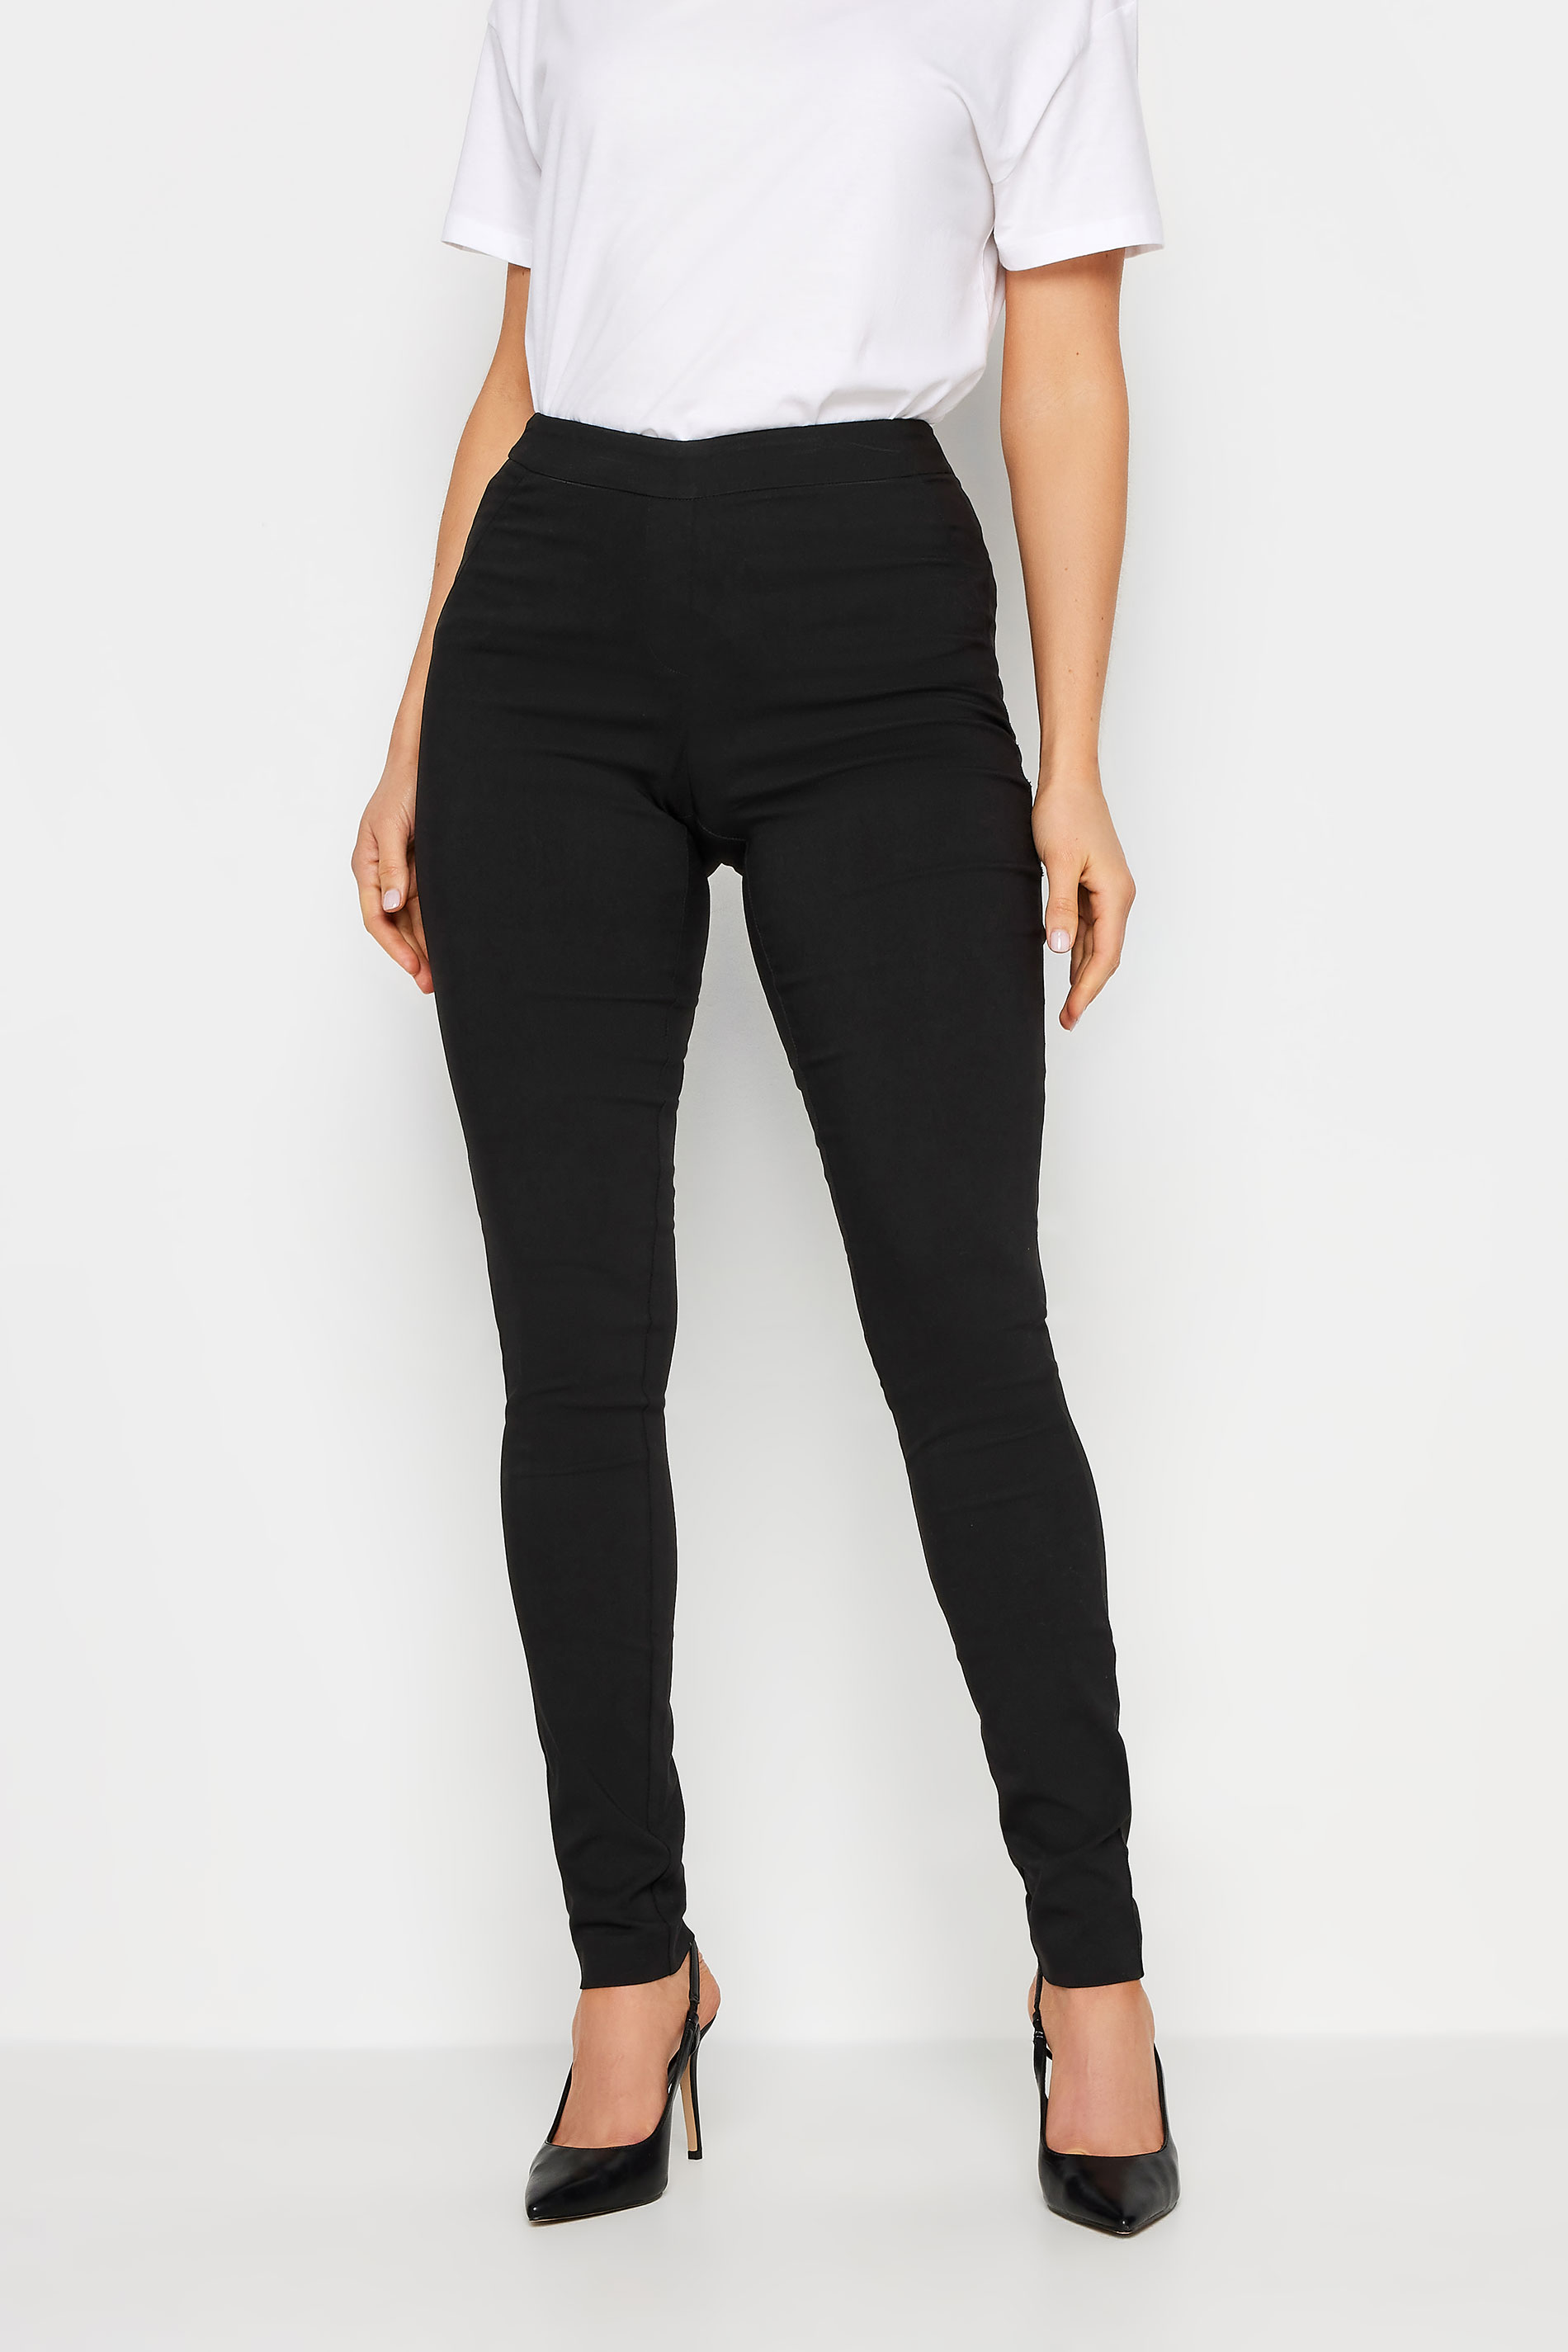 LTS Tall Black Stretch Skinny Trousers | Long Tall Sally 2